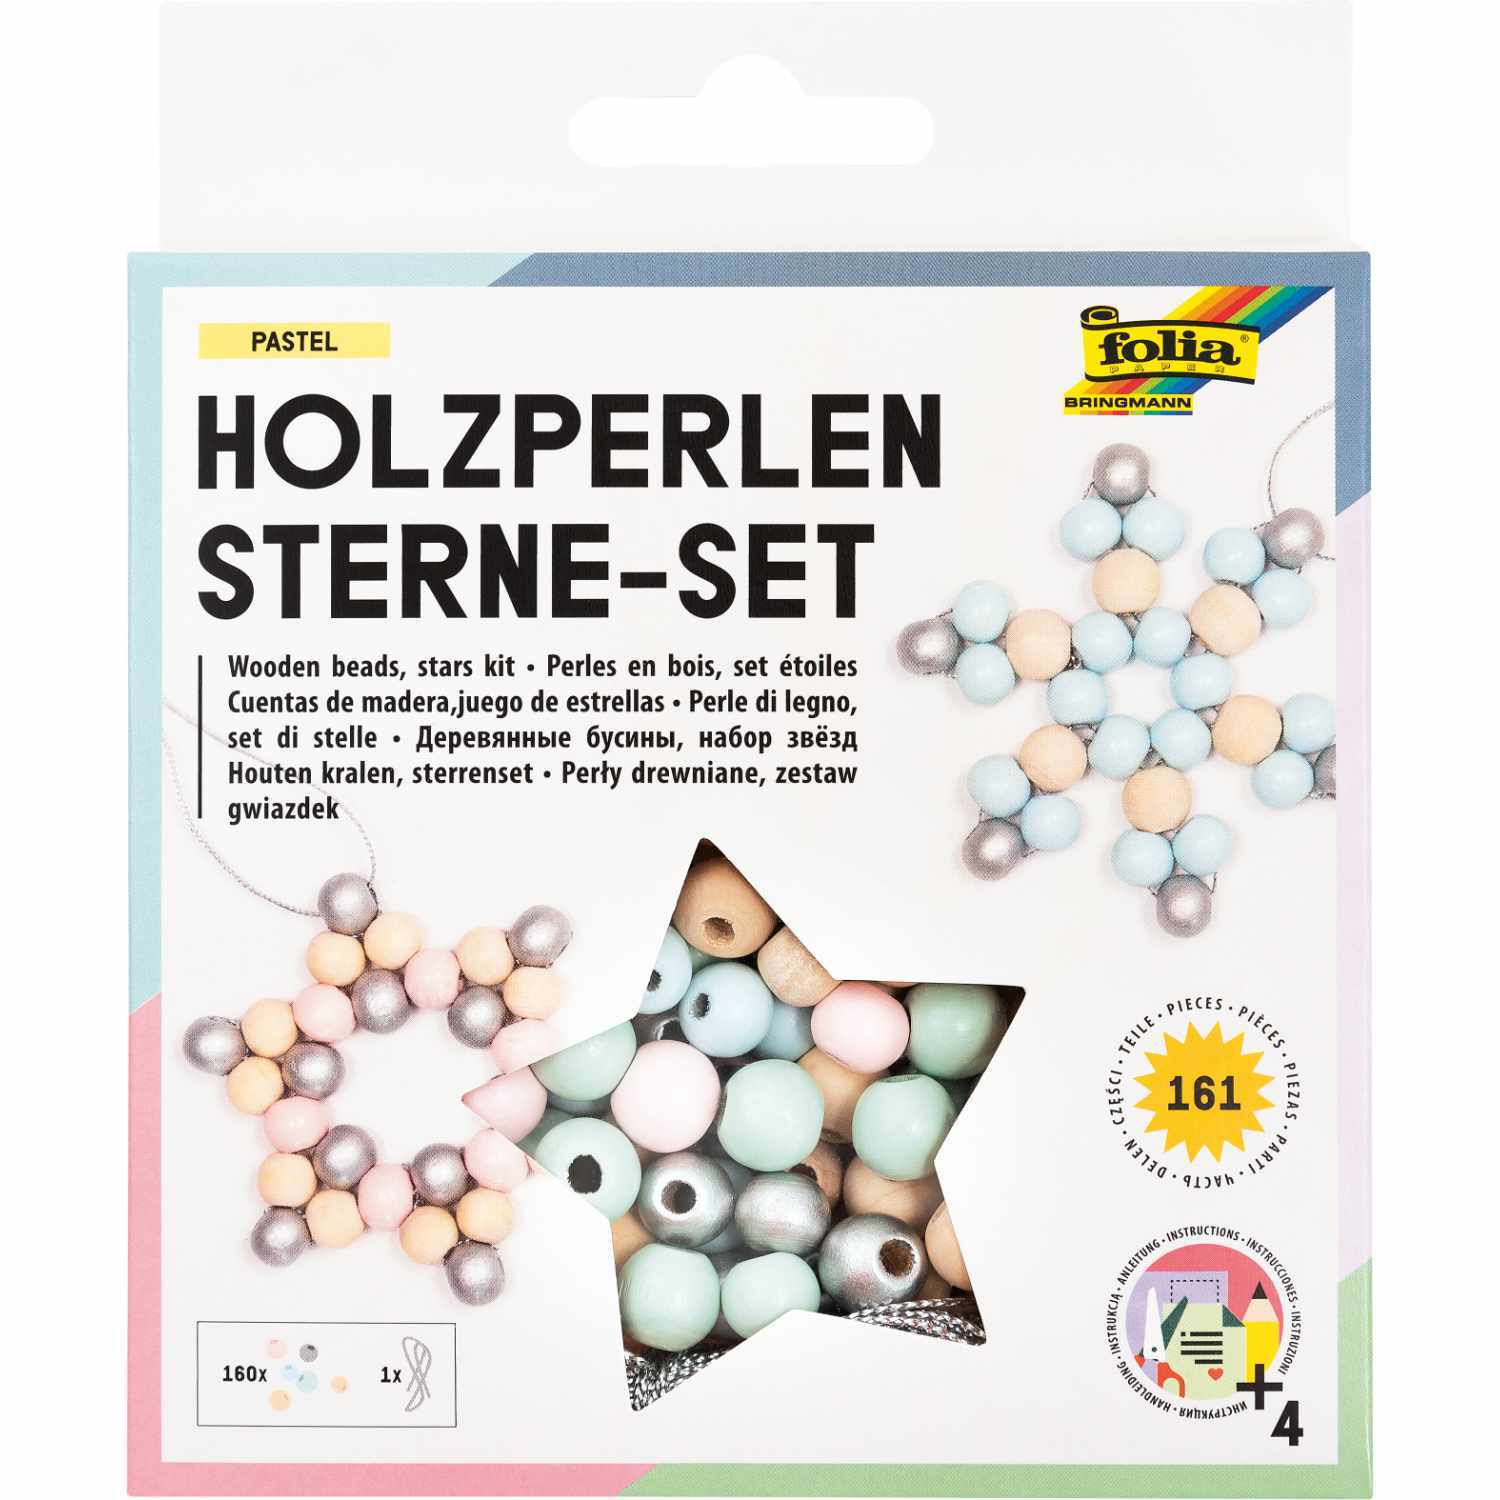 Holzperlen Stern-Set pastel 161teilig